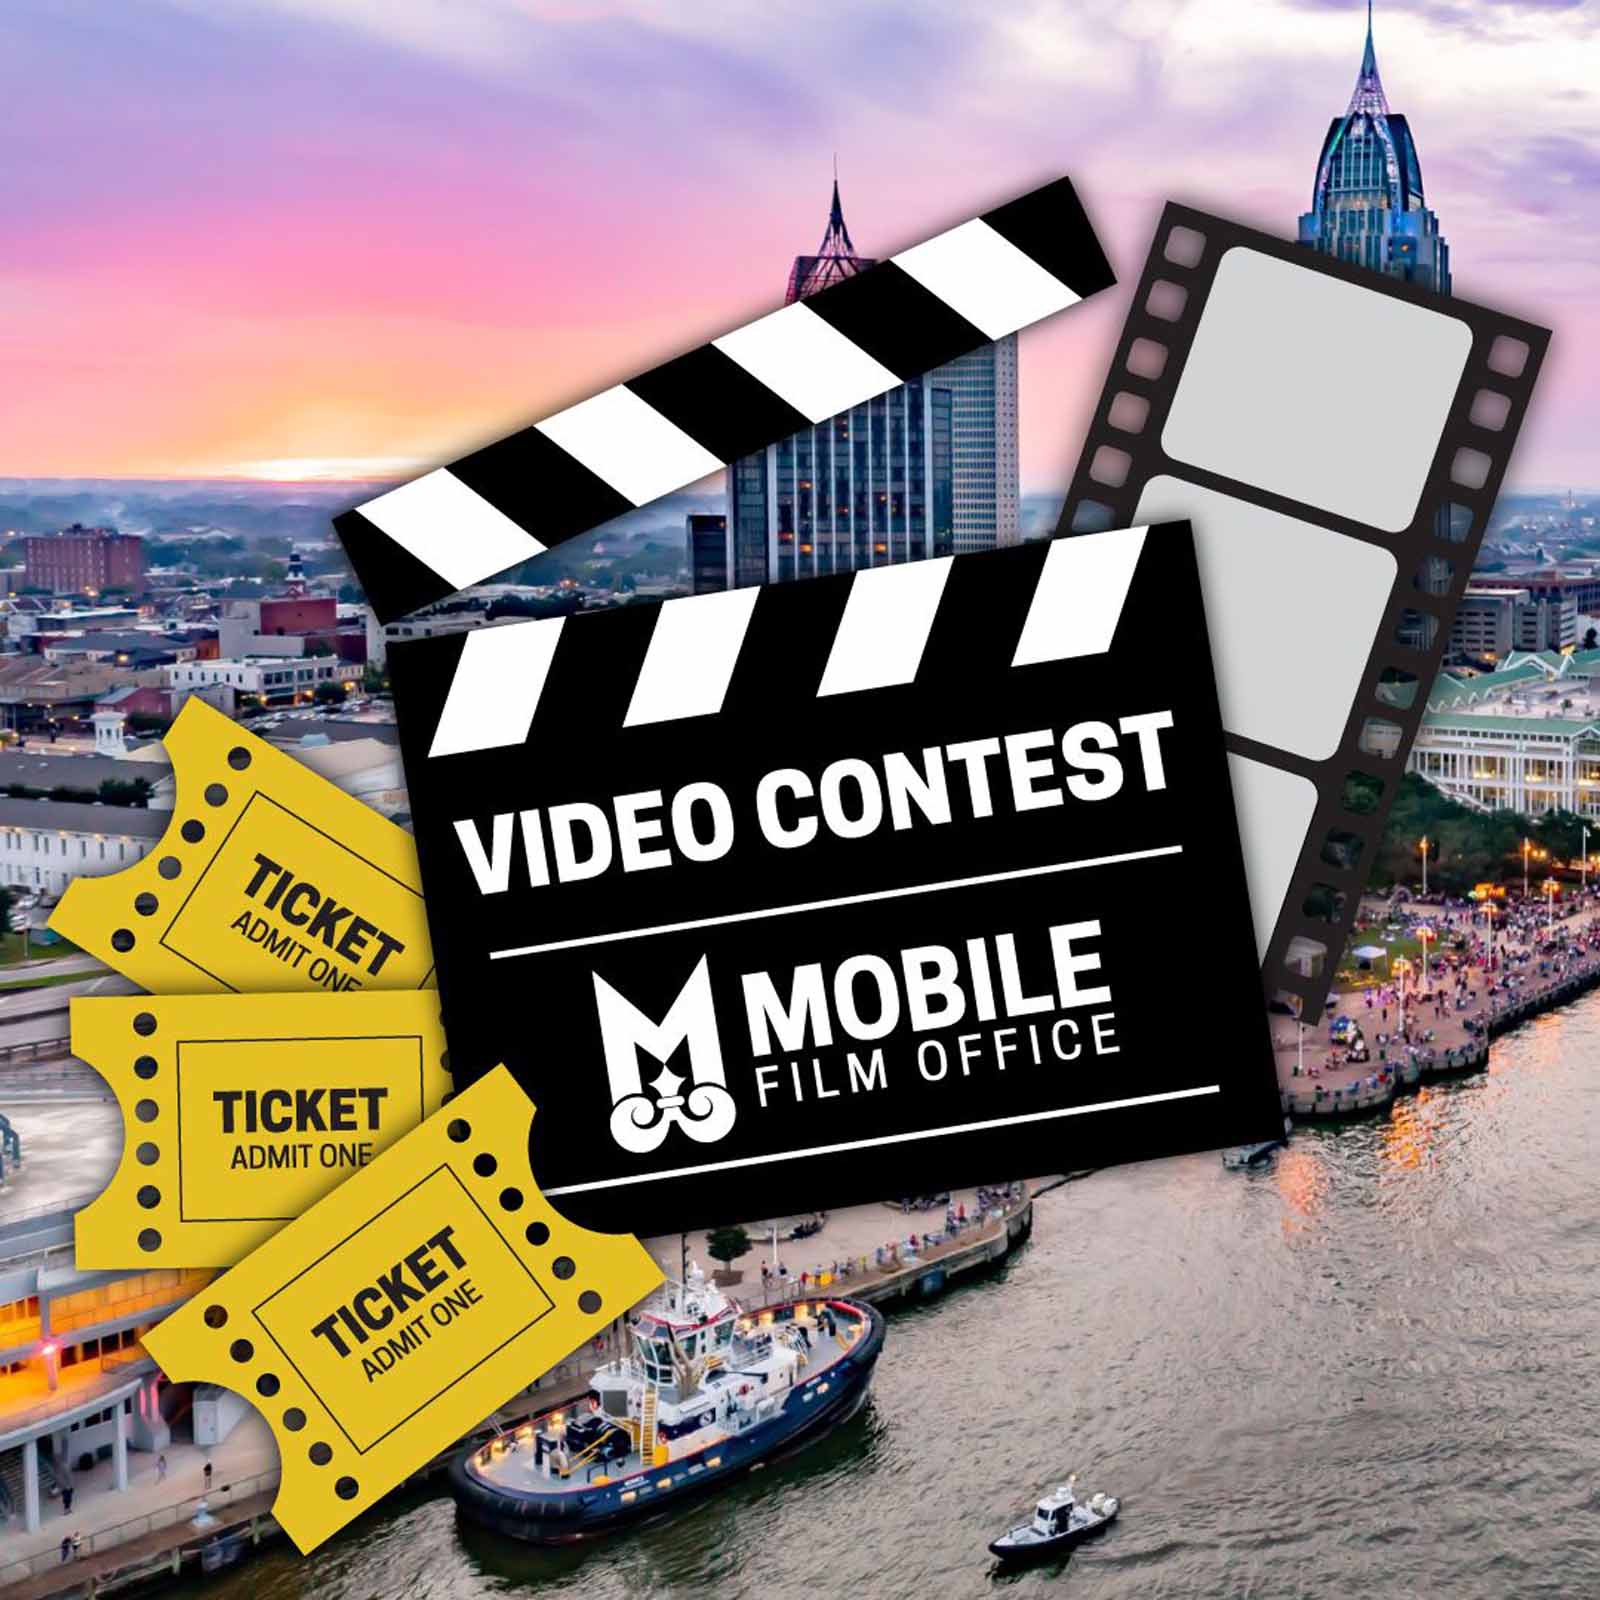 Mobile Film Office Announces Short Film Contest